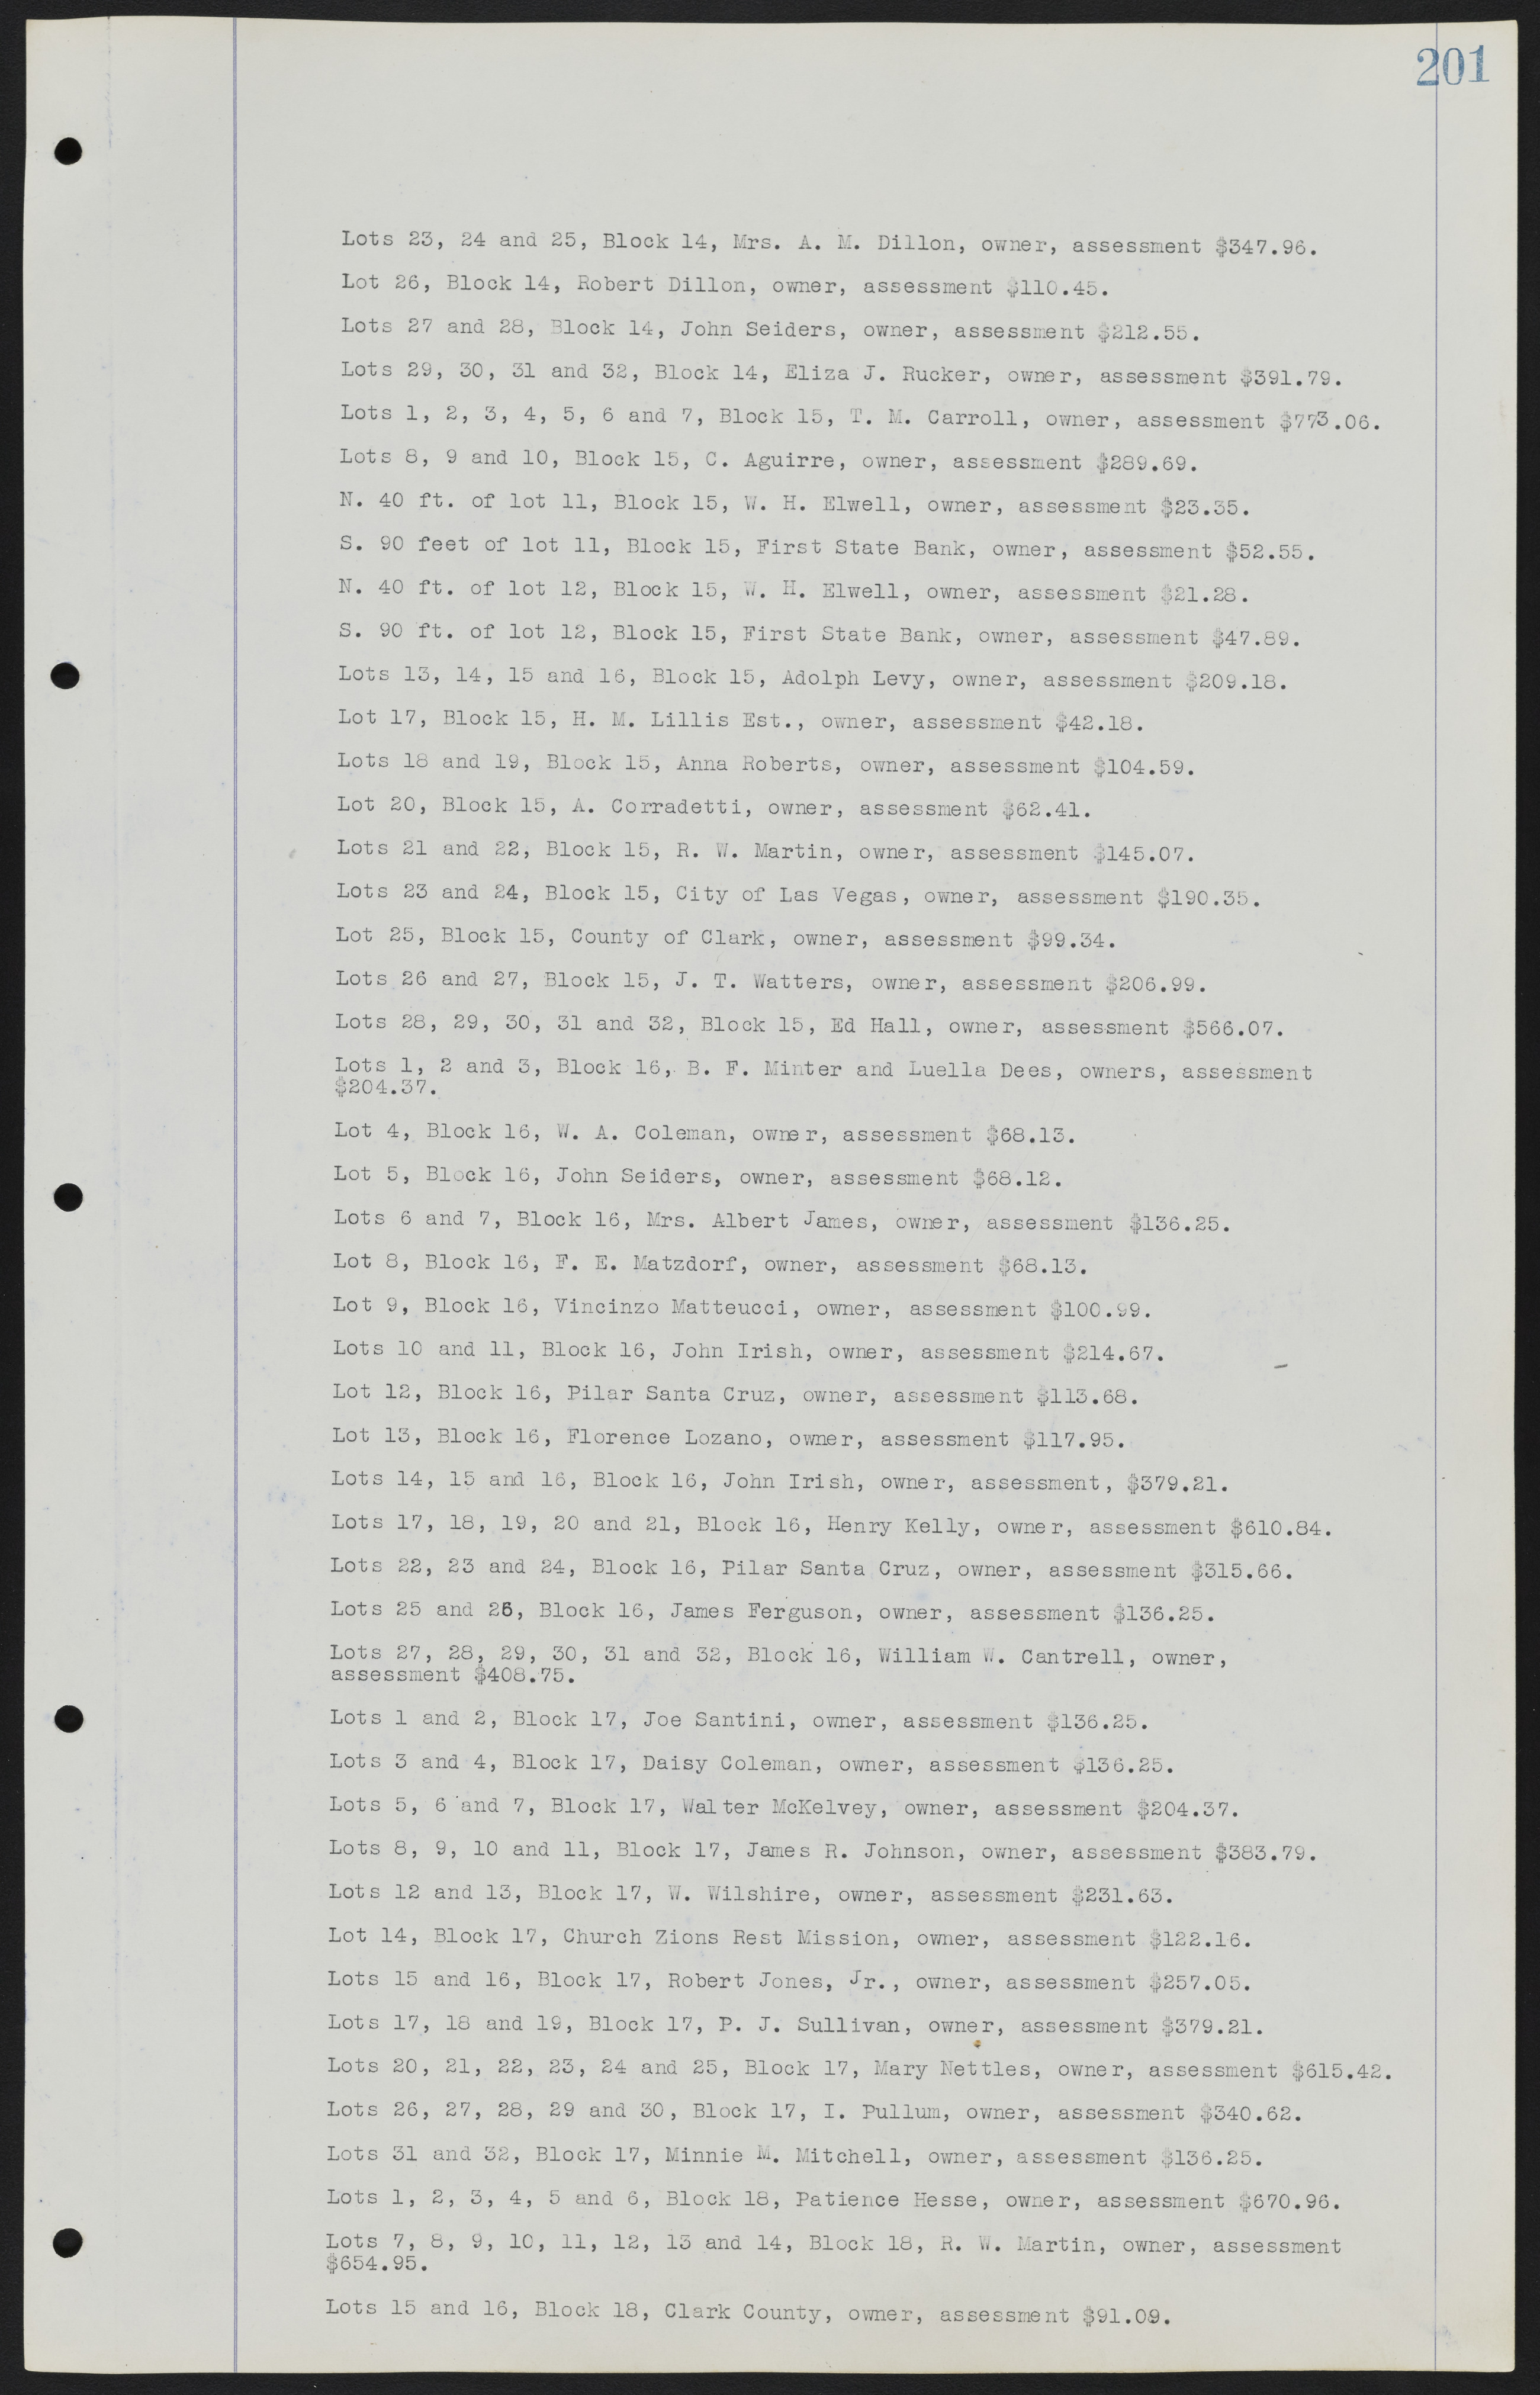 Las Vegas City Ordinances, July 18, 1911 to March 31, 1933, lvc000013-205